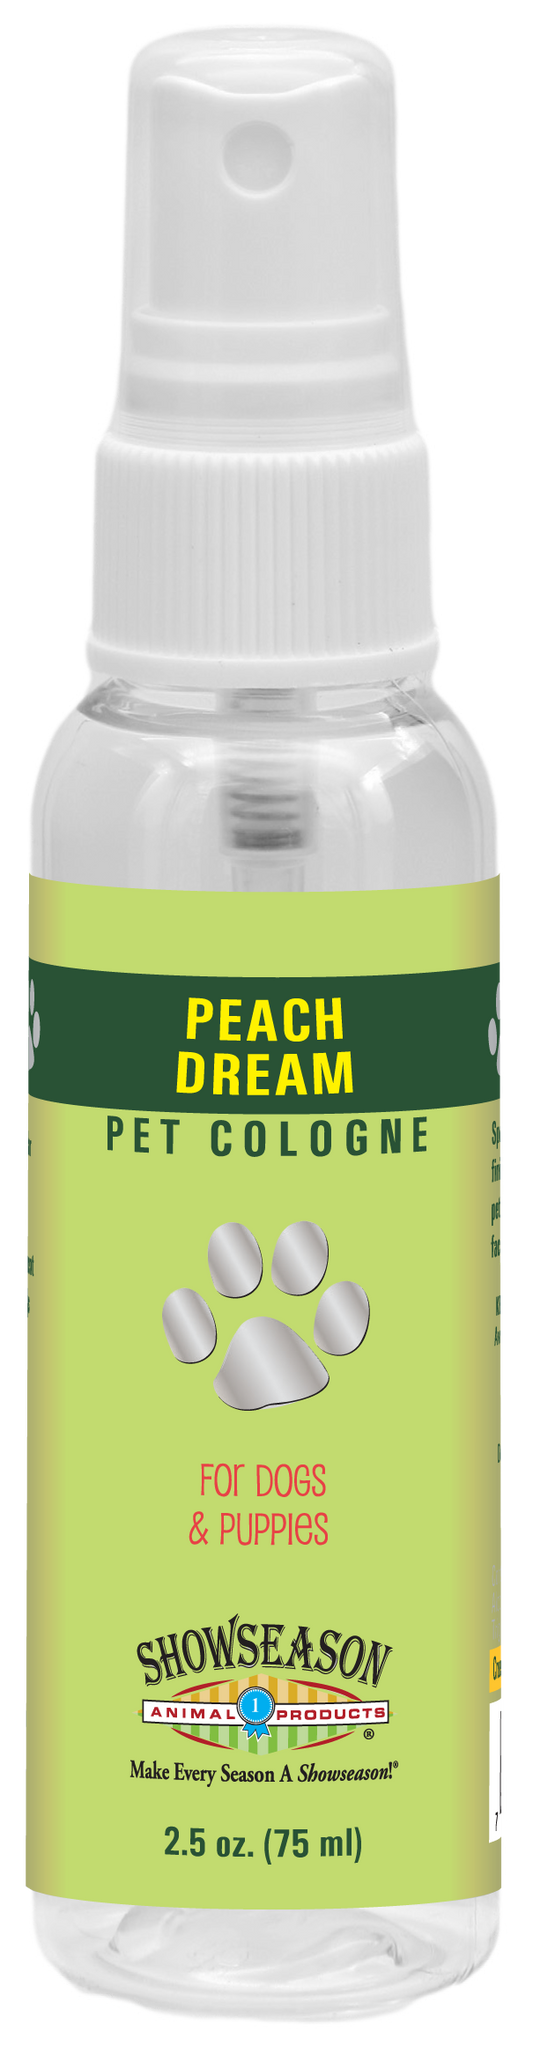 Peach Dream Pet Cologne| Showseason®